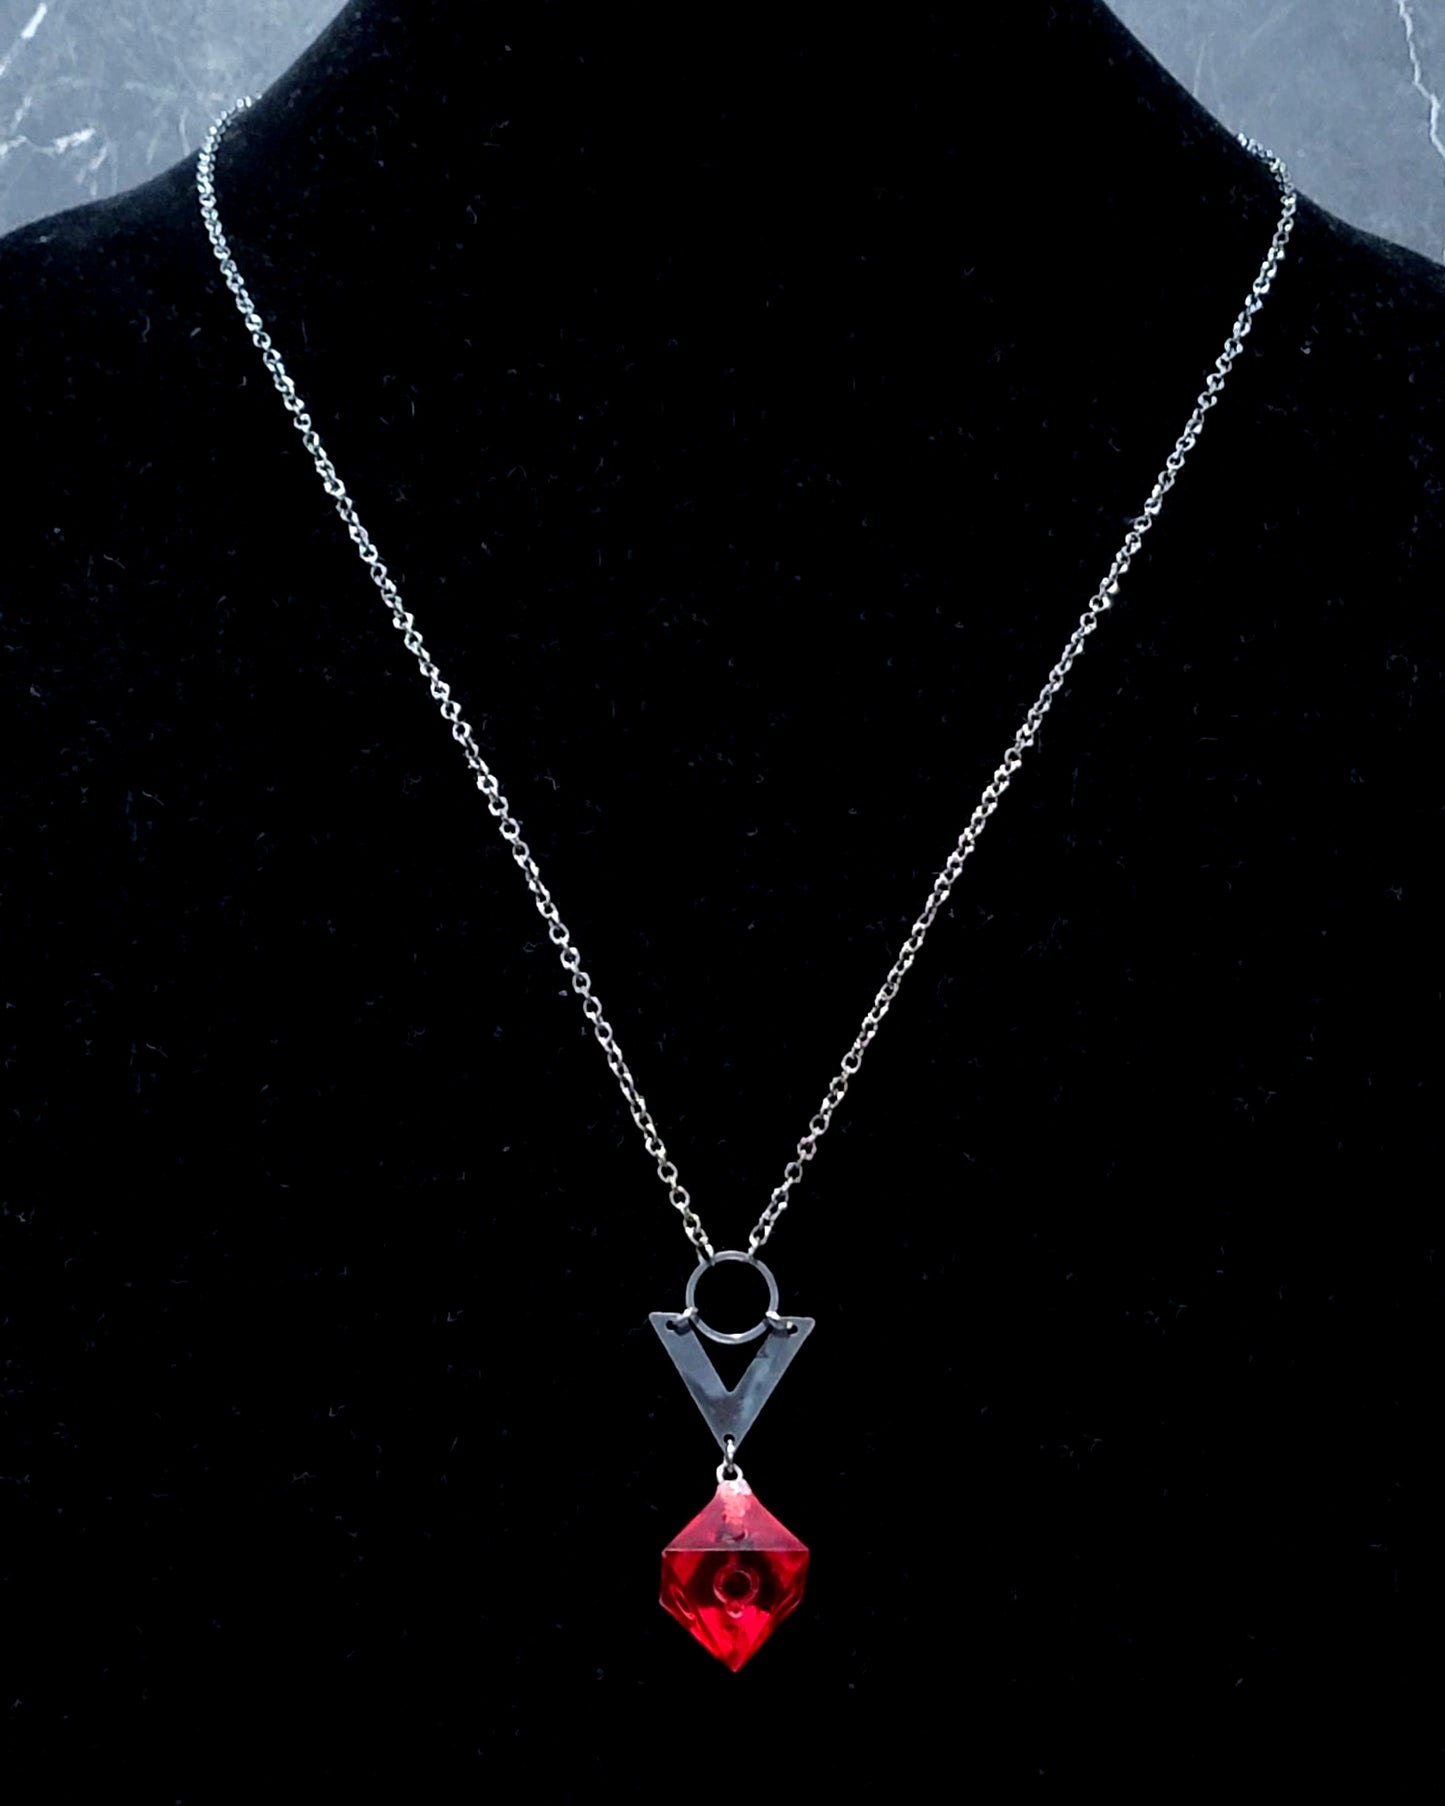 The Last Drop - D8 Necklace | Handmade Dice Jewelry |